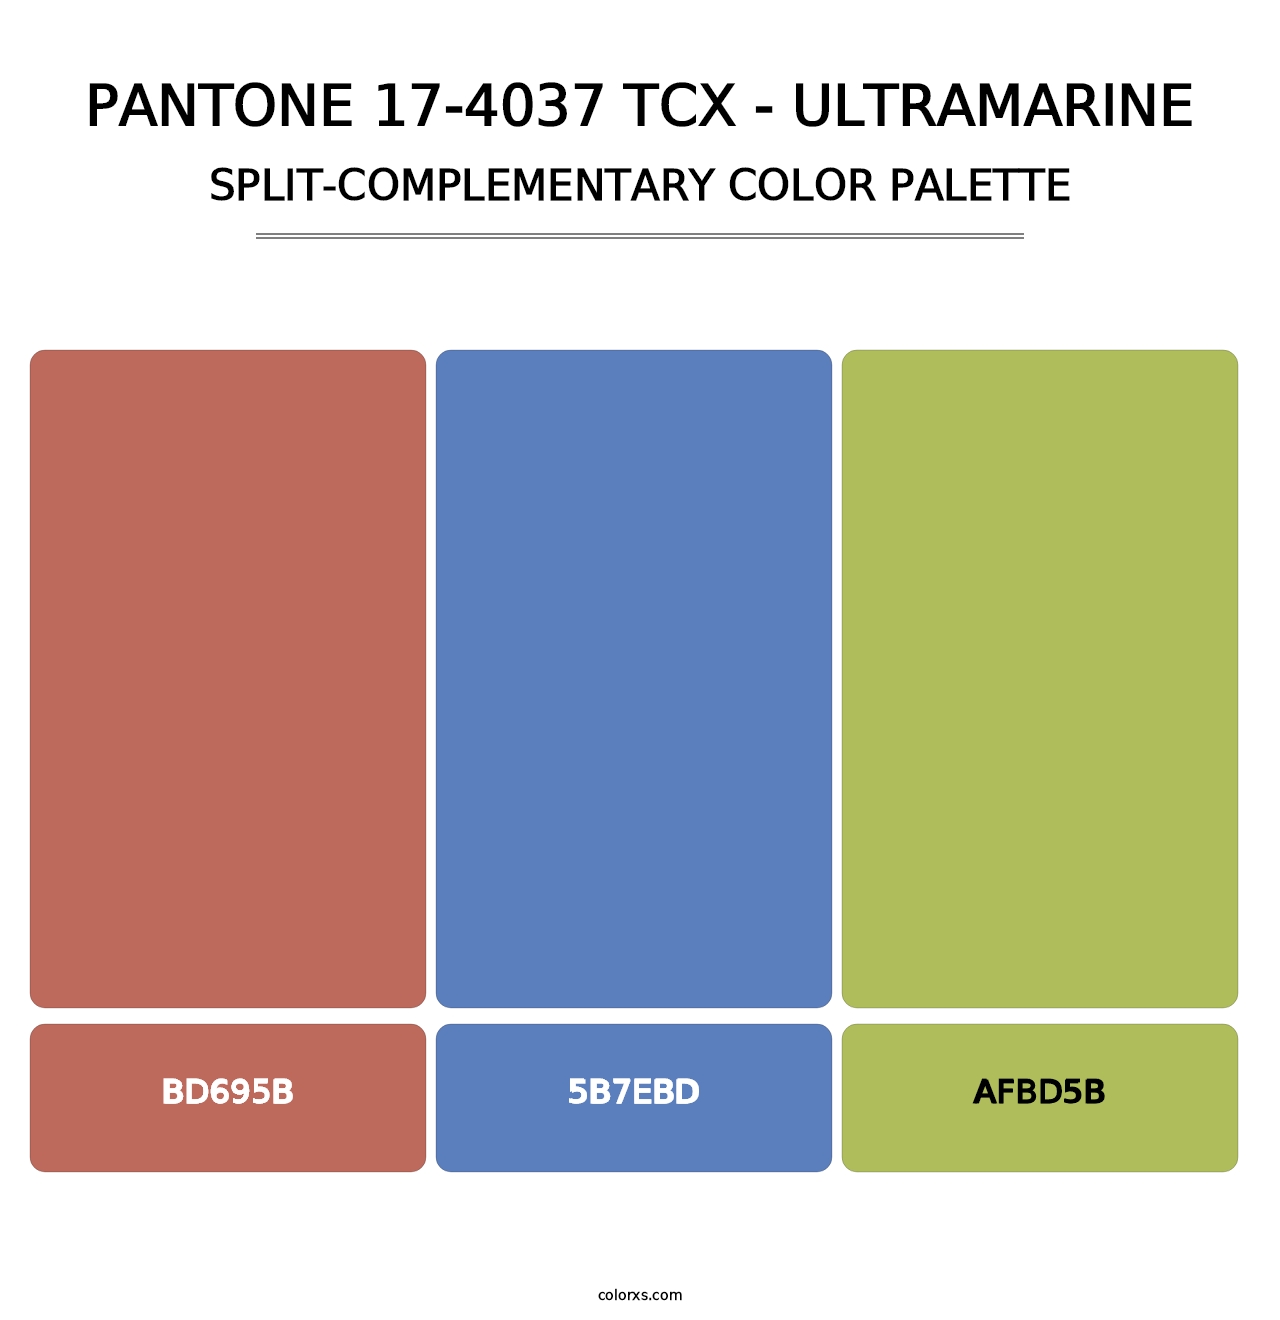 PANTONE 17-4037 TCX - Ultramarine - Split-Complementary Color Palette